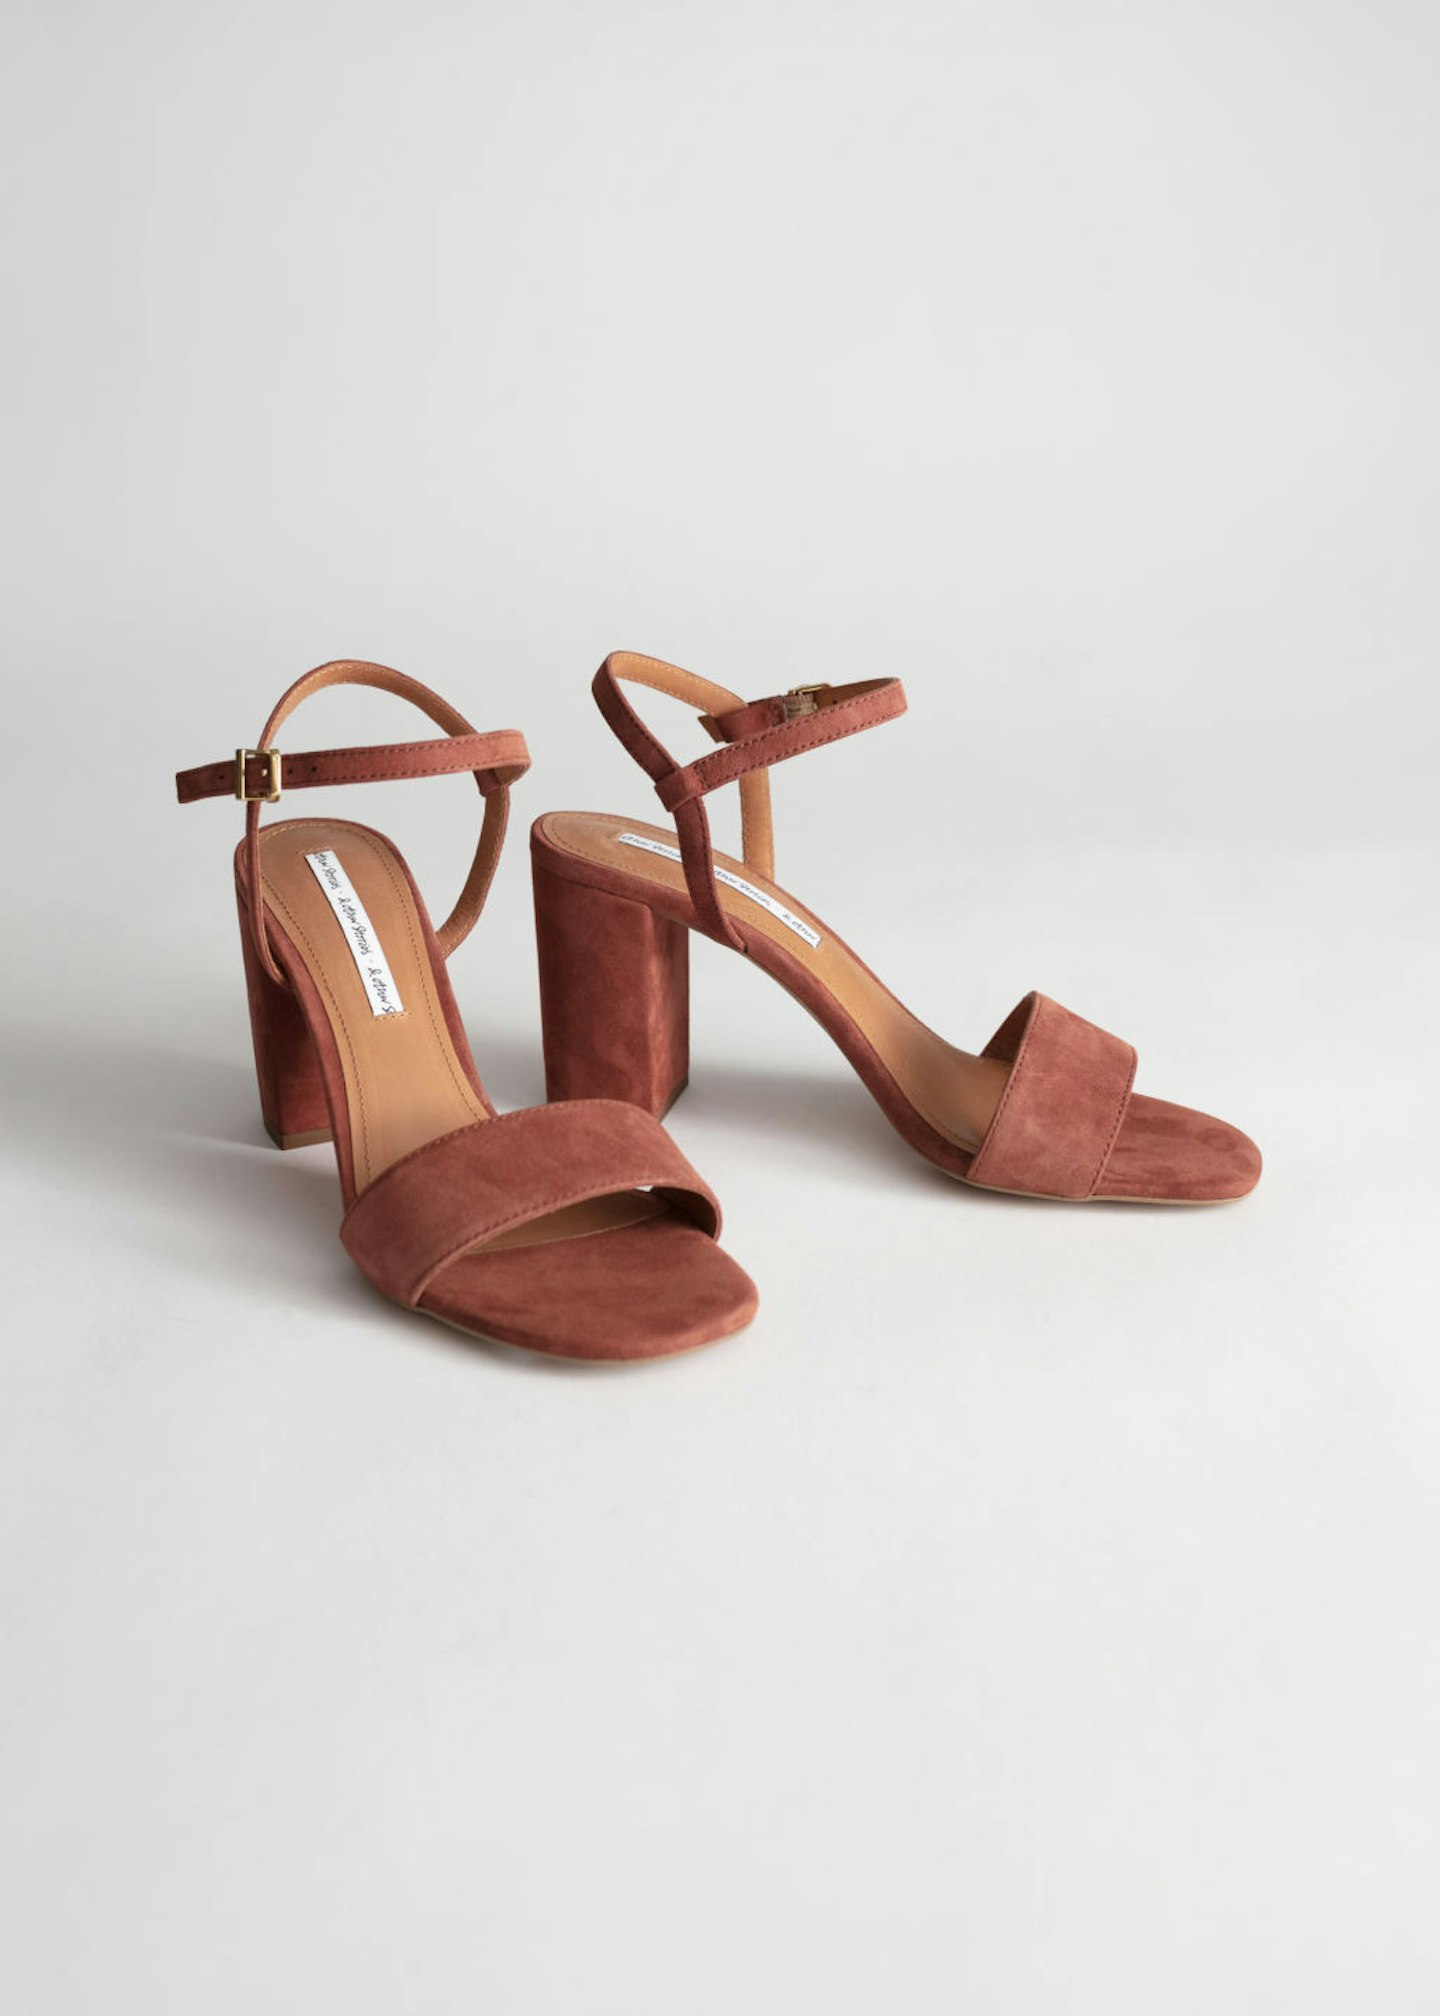 Strappy Block Heel Sandals, £69